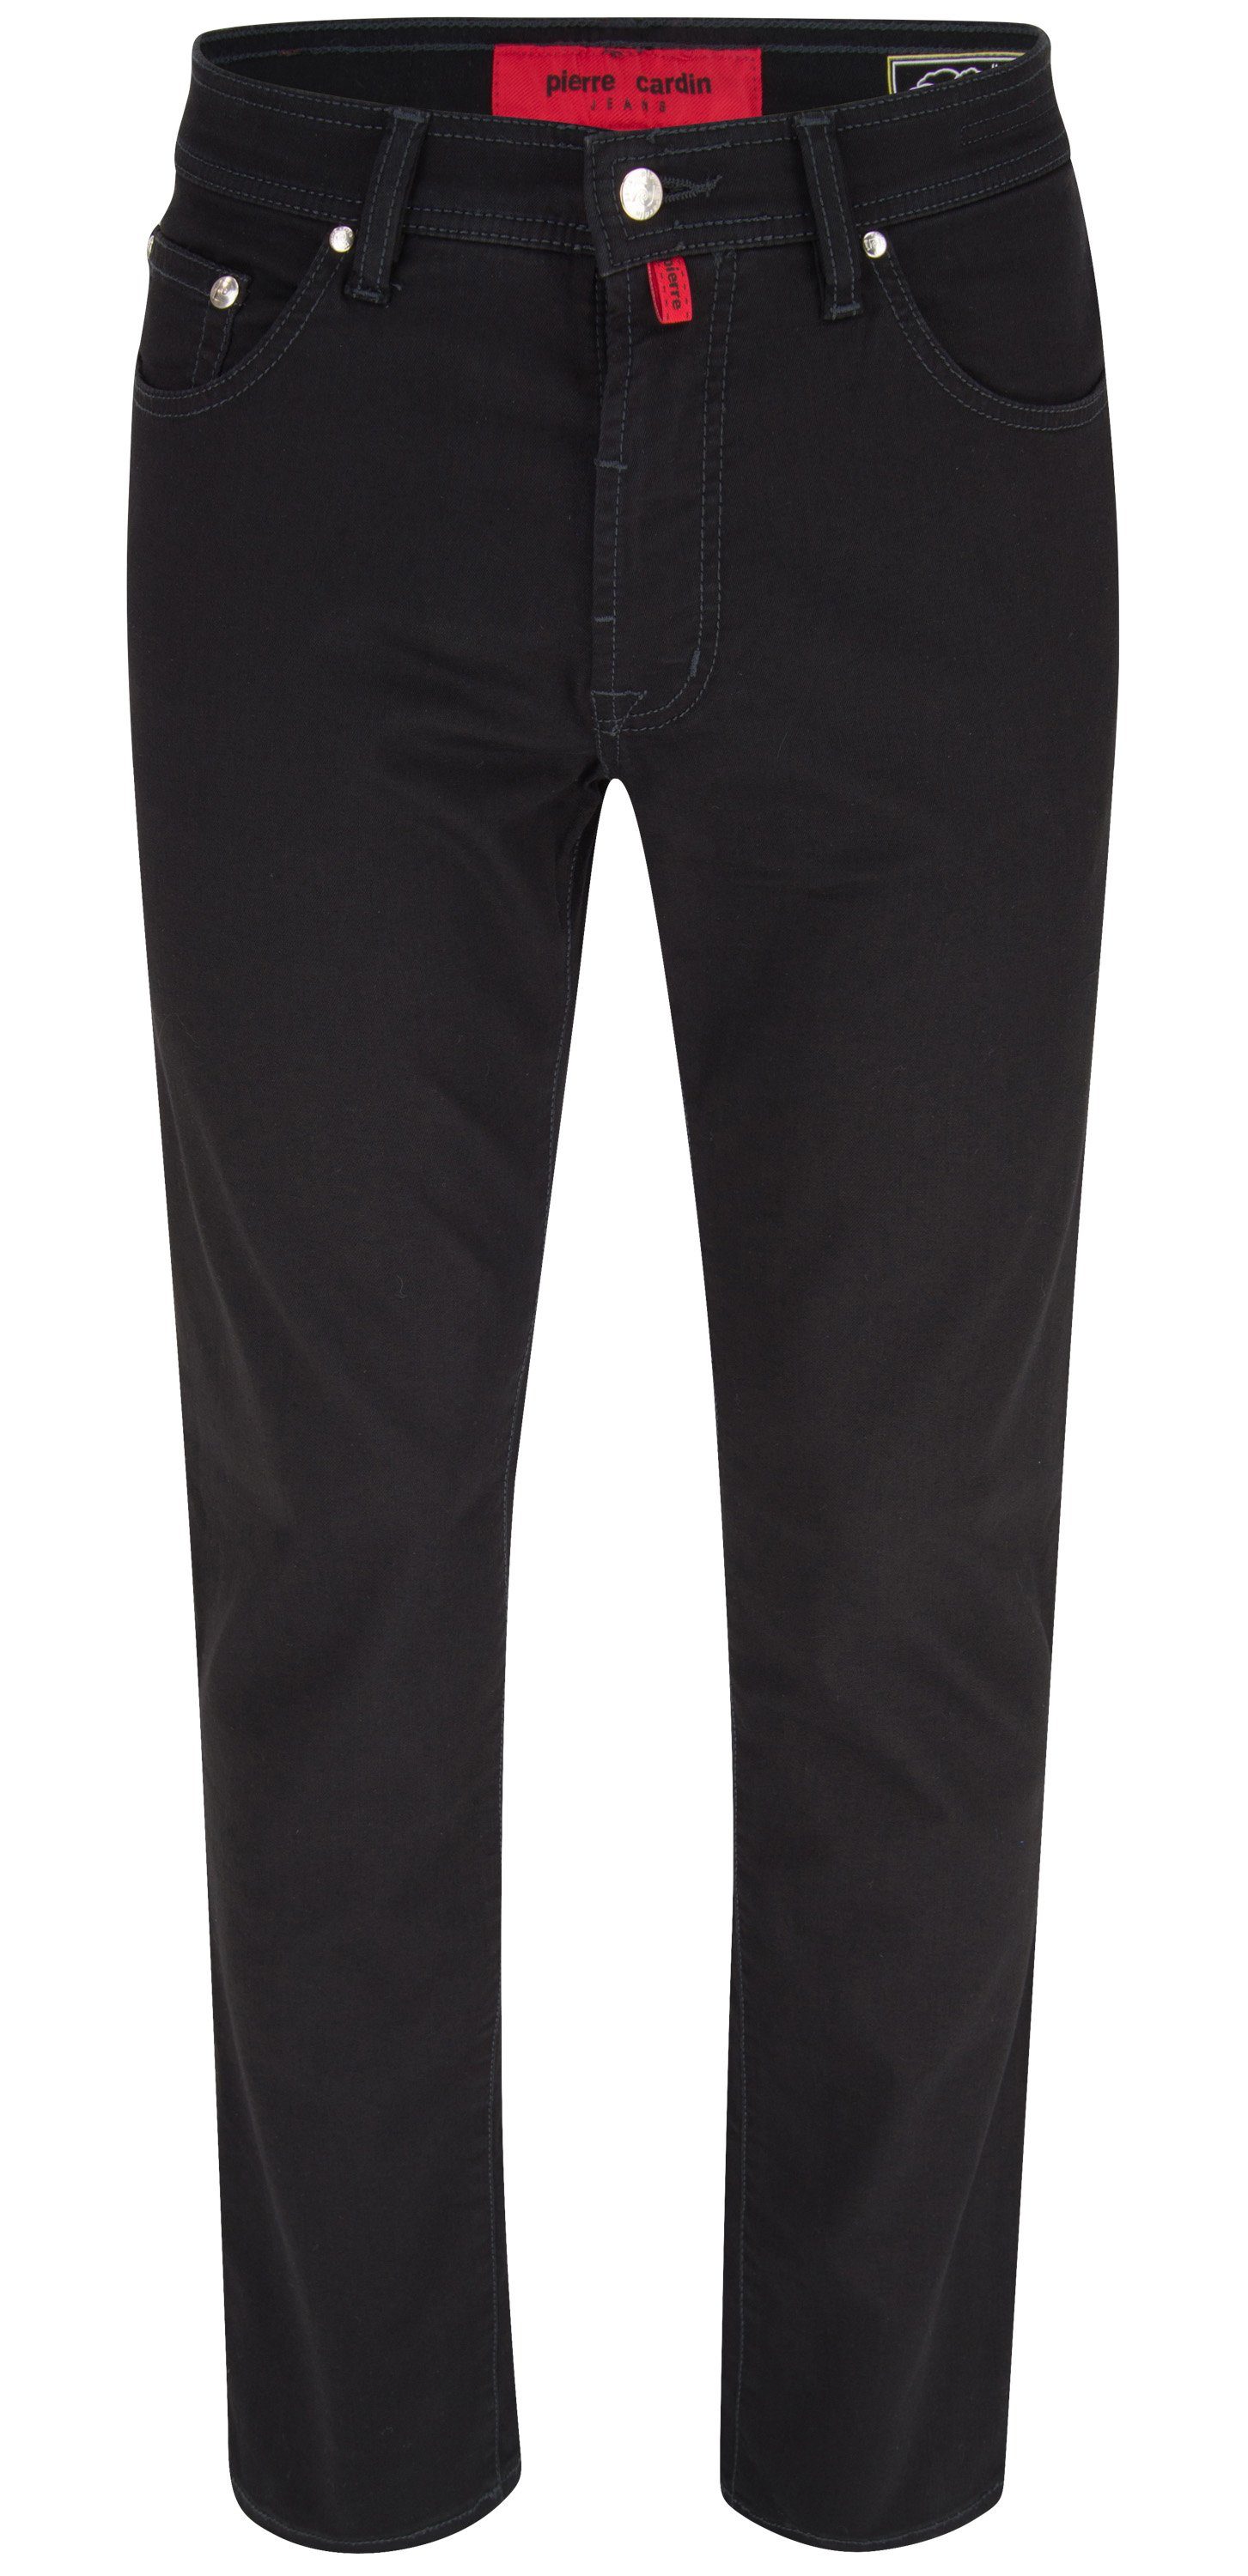 Pierre Cardin 5-Pocket-Jeans PIERRE CARDIN deep summer touch black DEAUVILLE 31961 air 7330.86